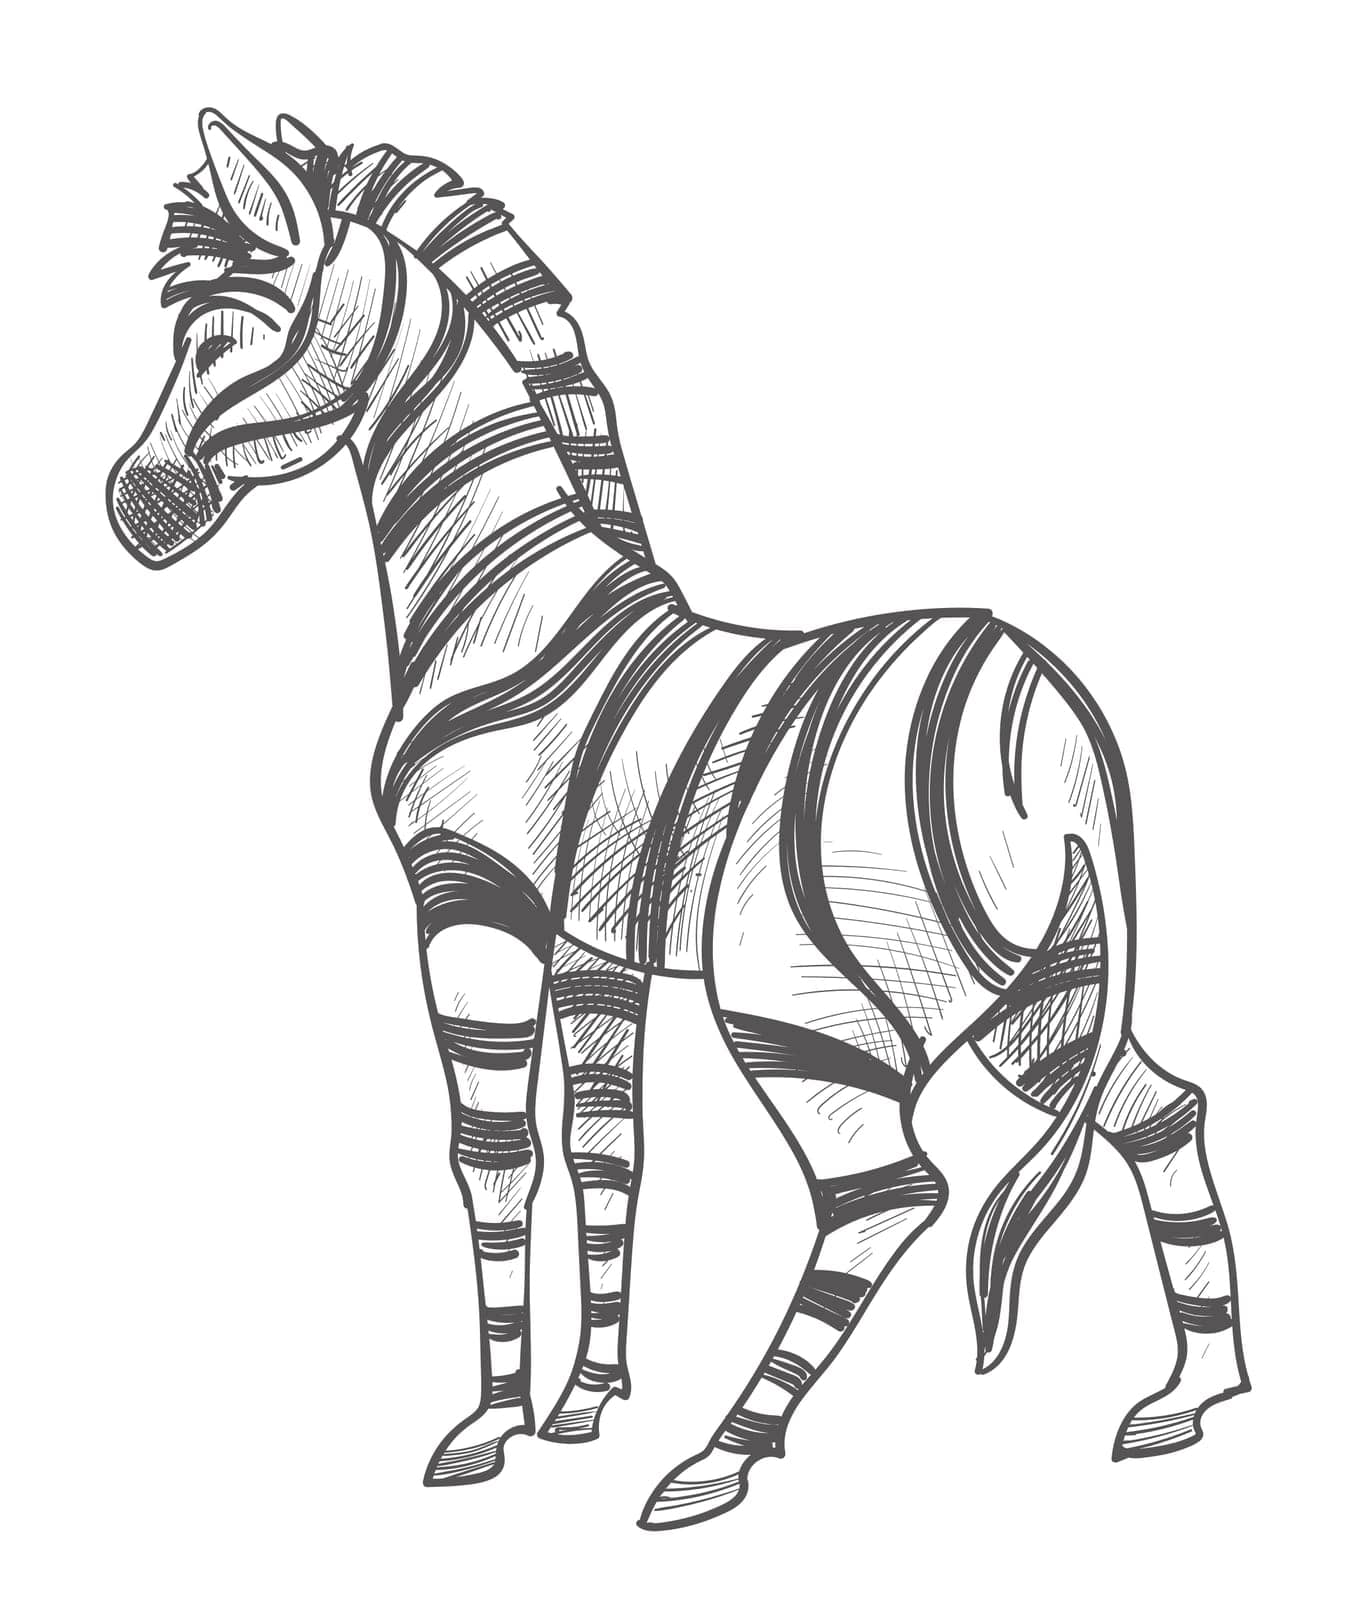 Zebra animal with stripes on fur monochrome sketch by Sonulkaster